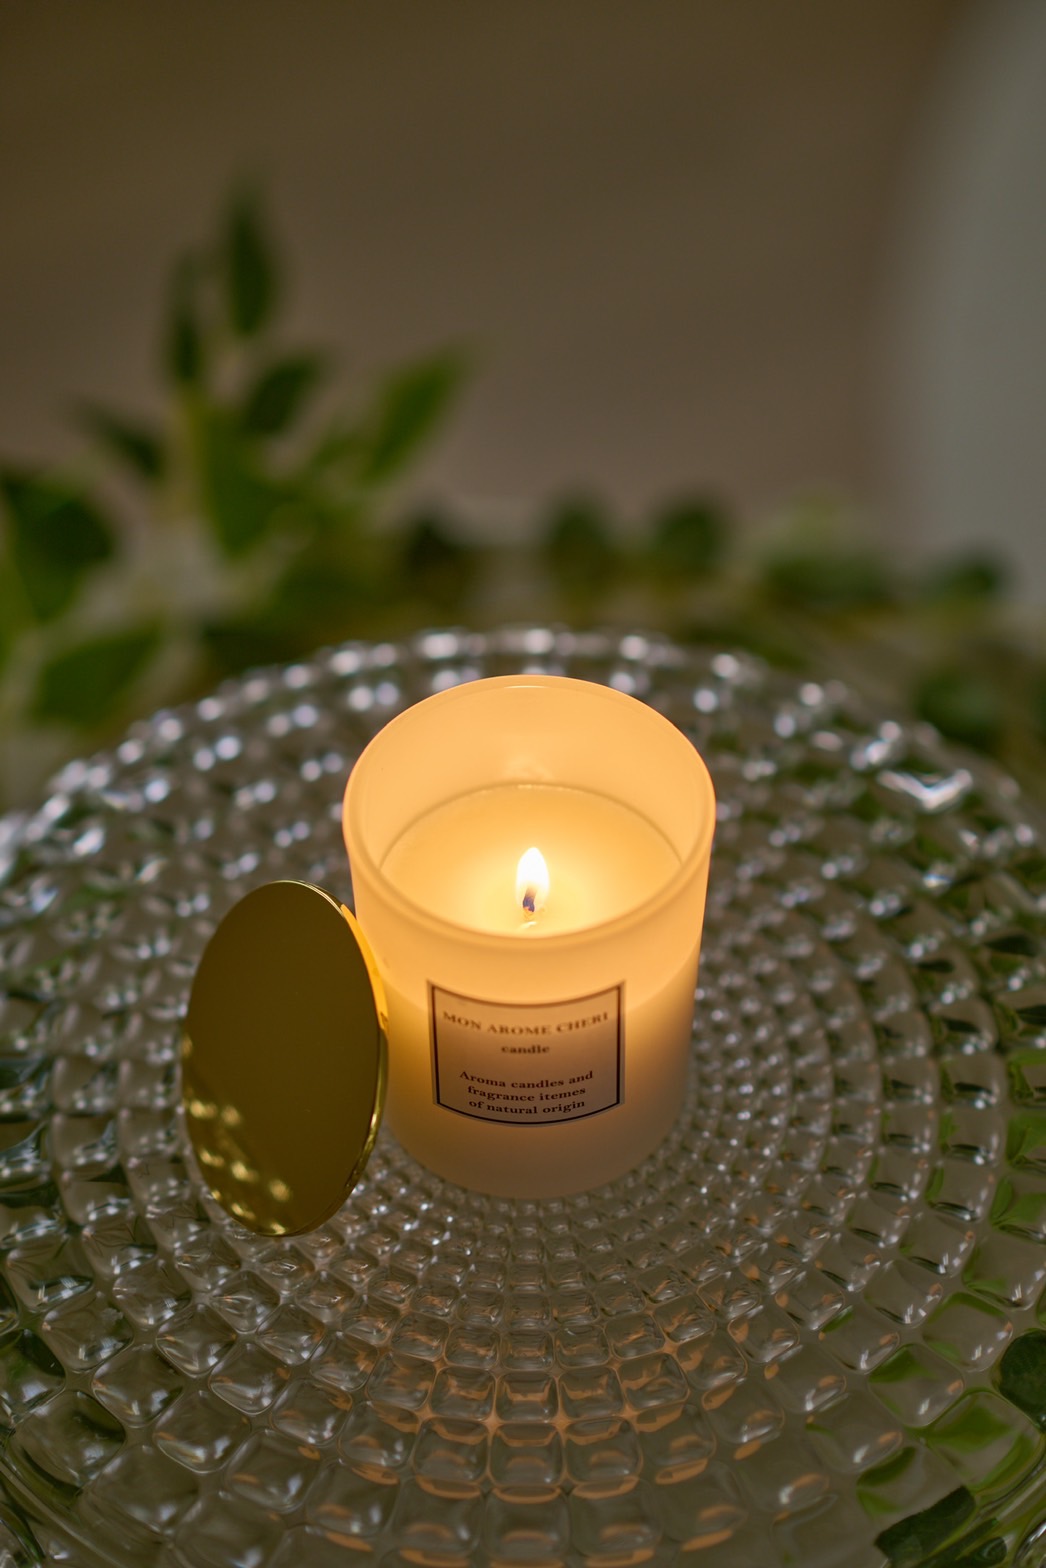 Soy aroma candle （大豆ワックスアロマキャンドル蓋付き） | MON